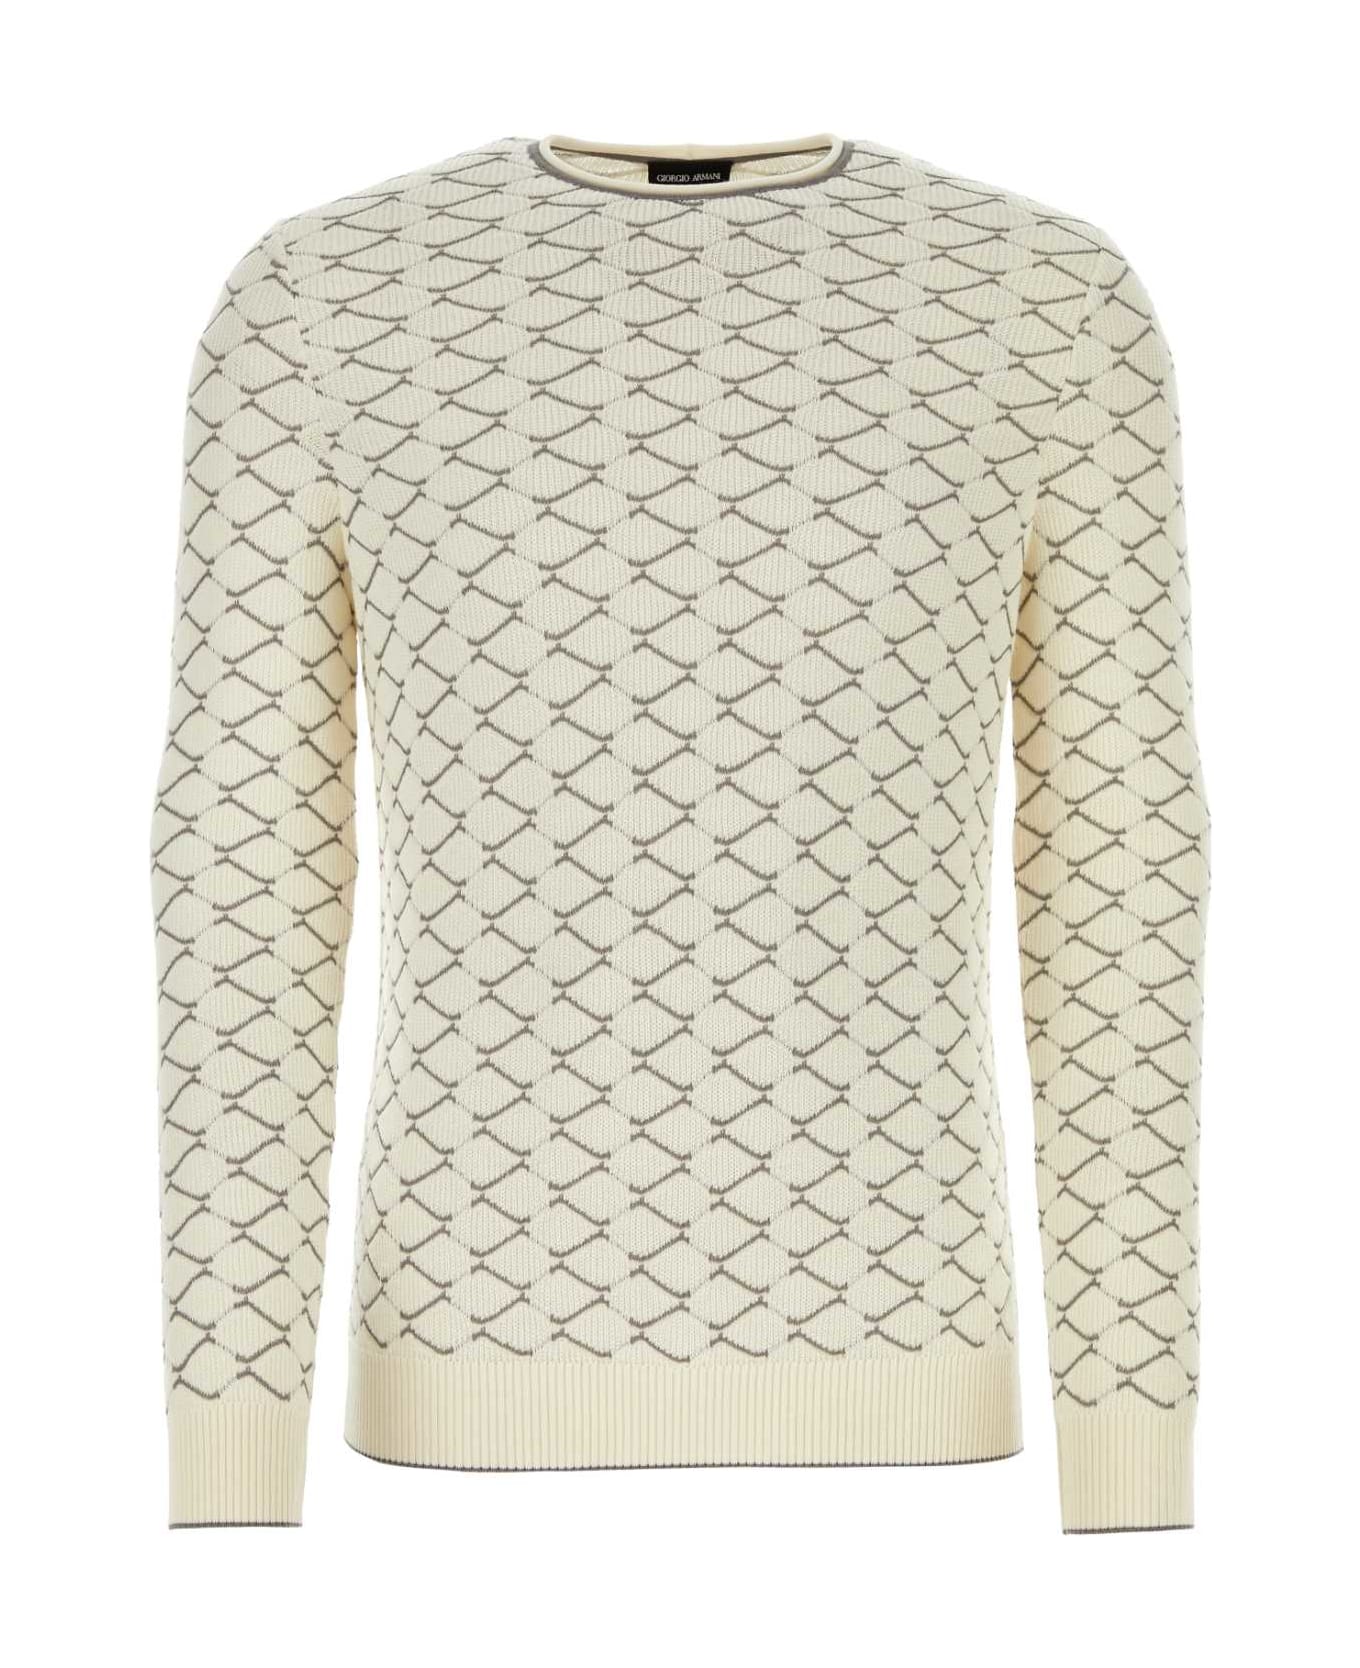 Giorgio Armani Ivory Cotton Blend Sweater - Beige